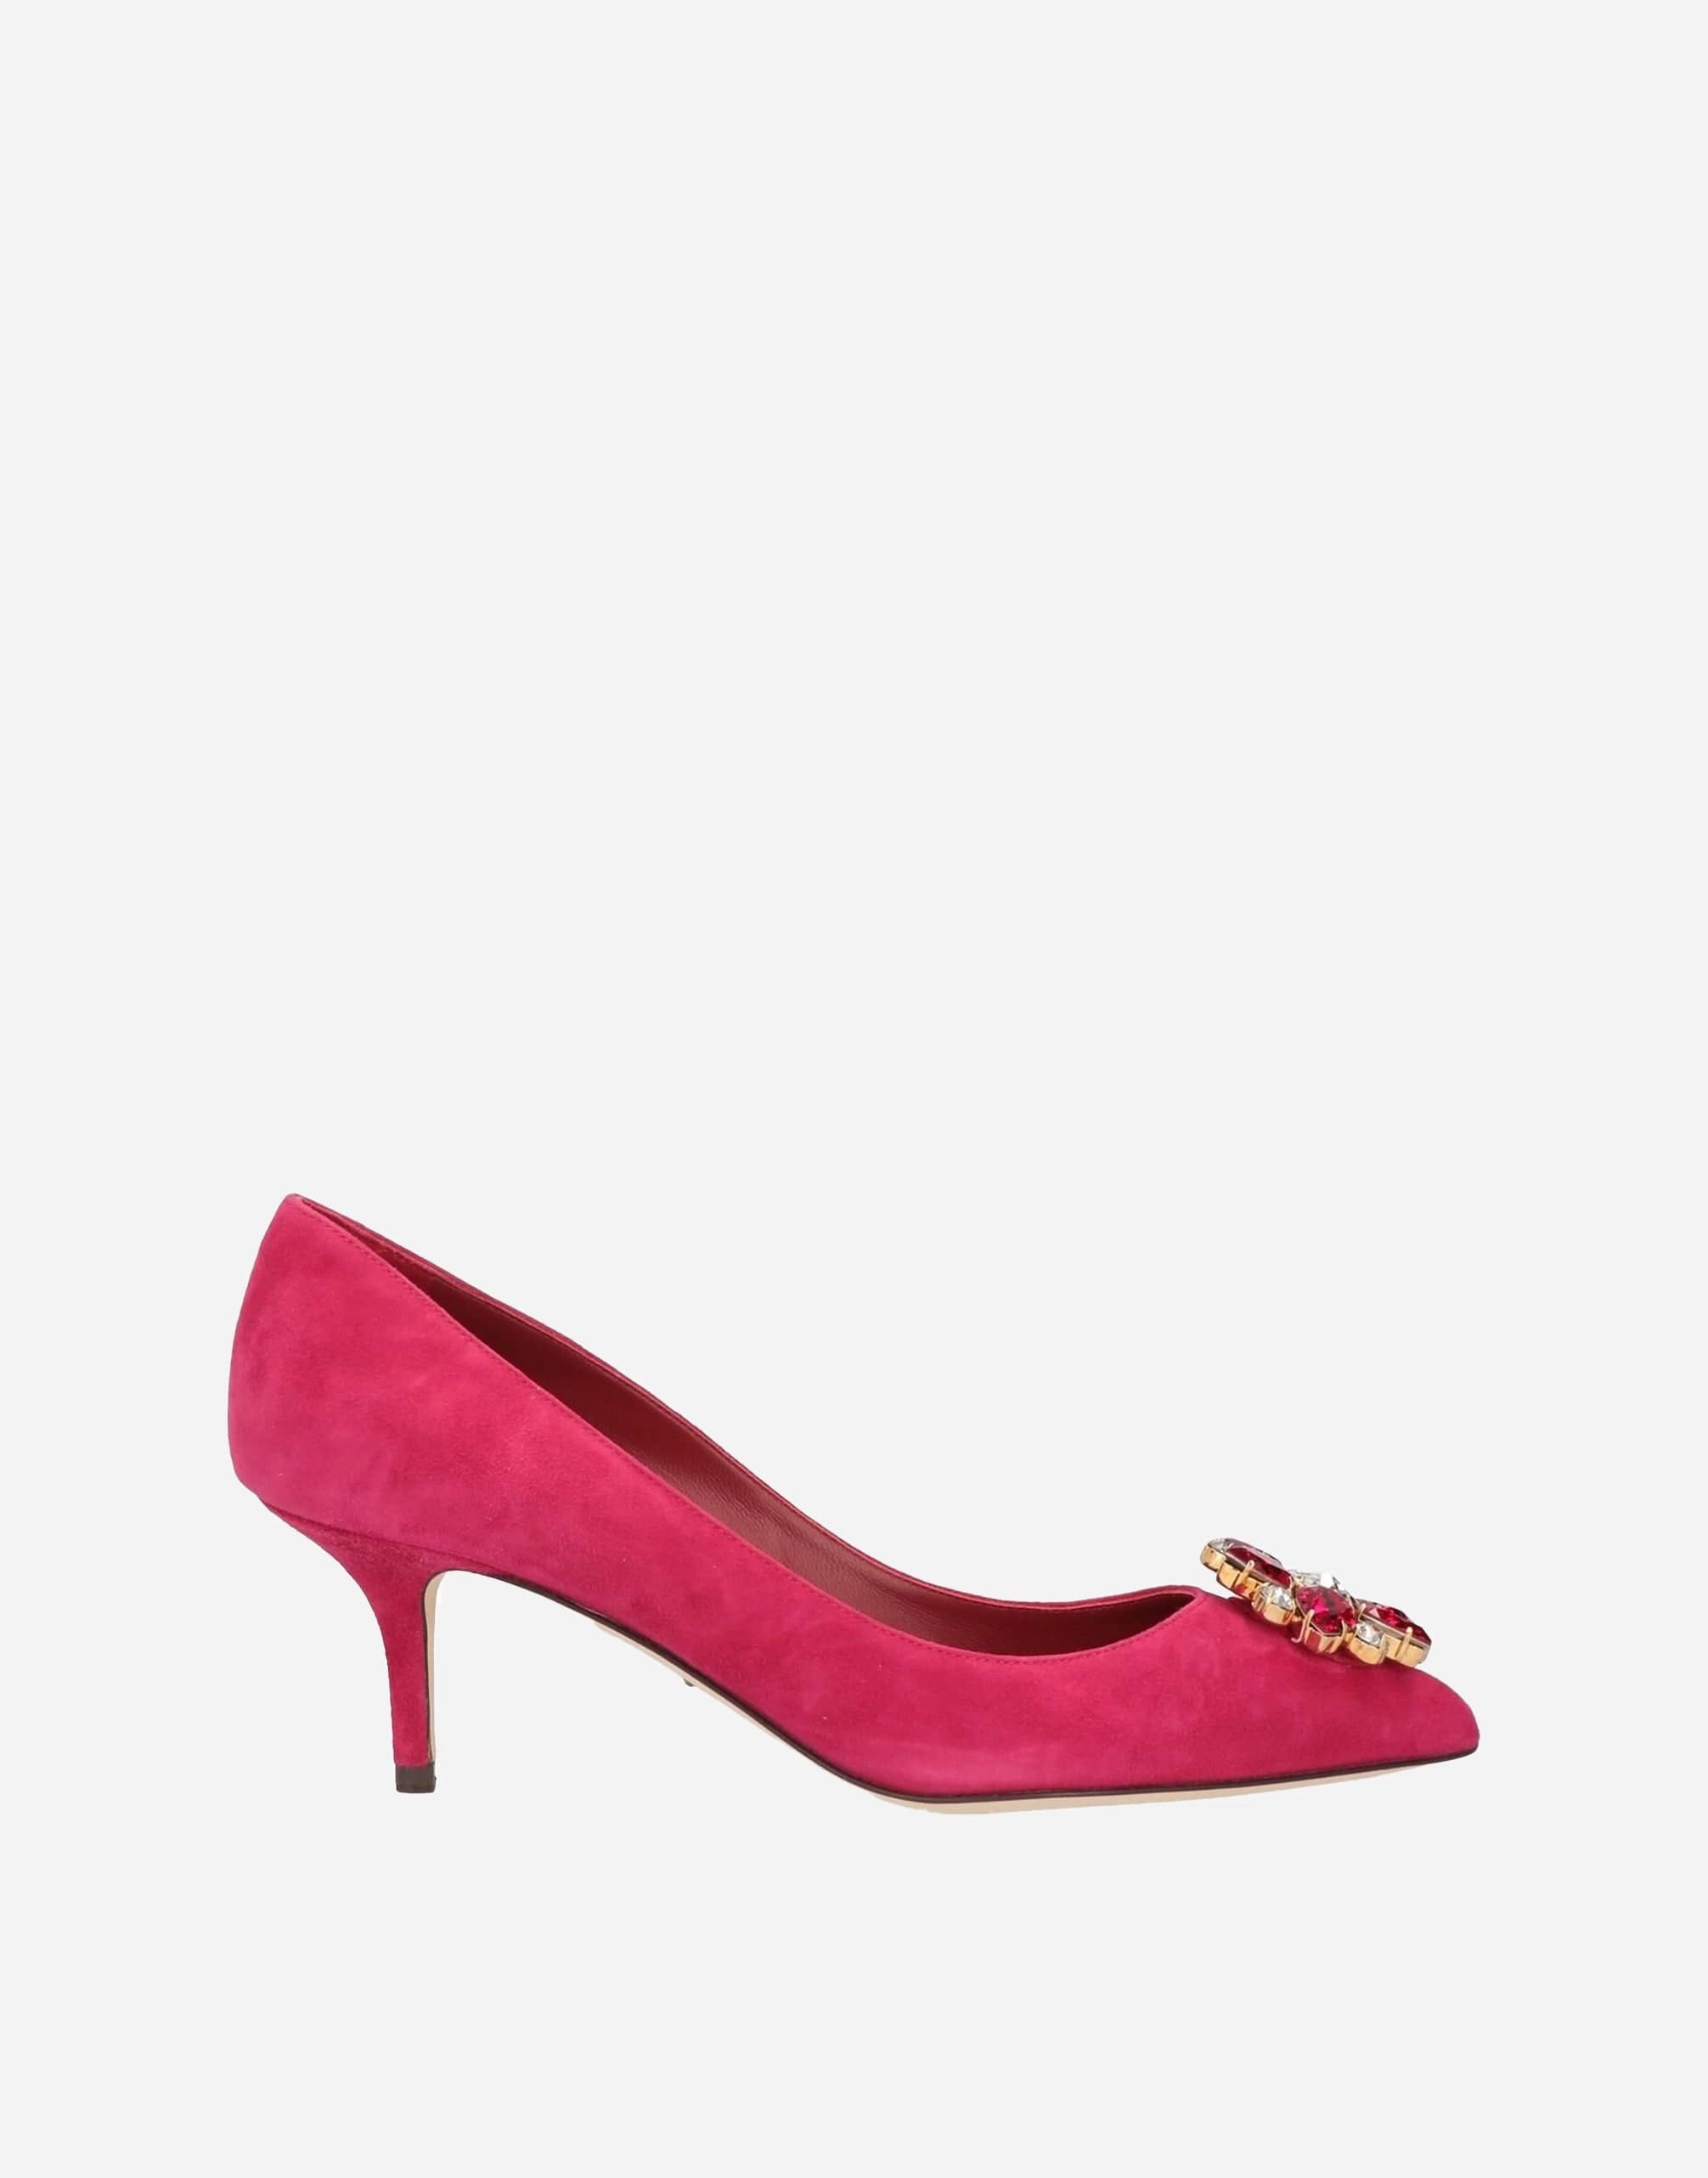 Dolce & Gabbana Pink Suede Crystals Heels Pumps Shoes